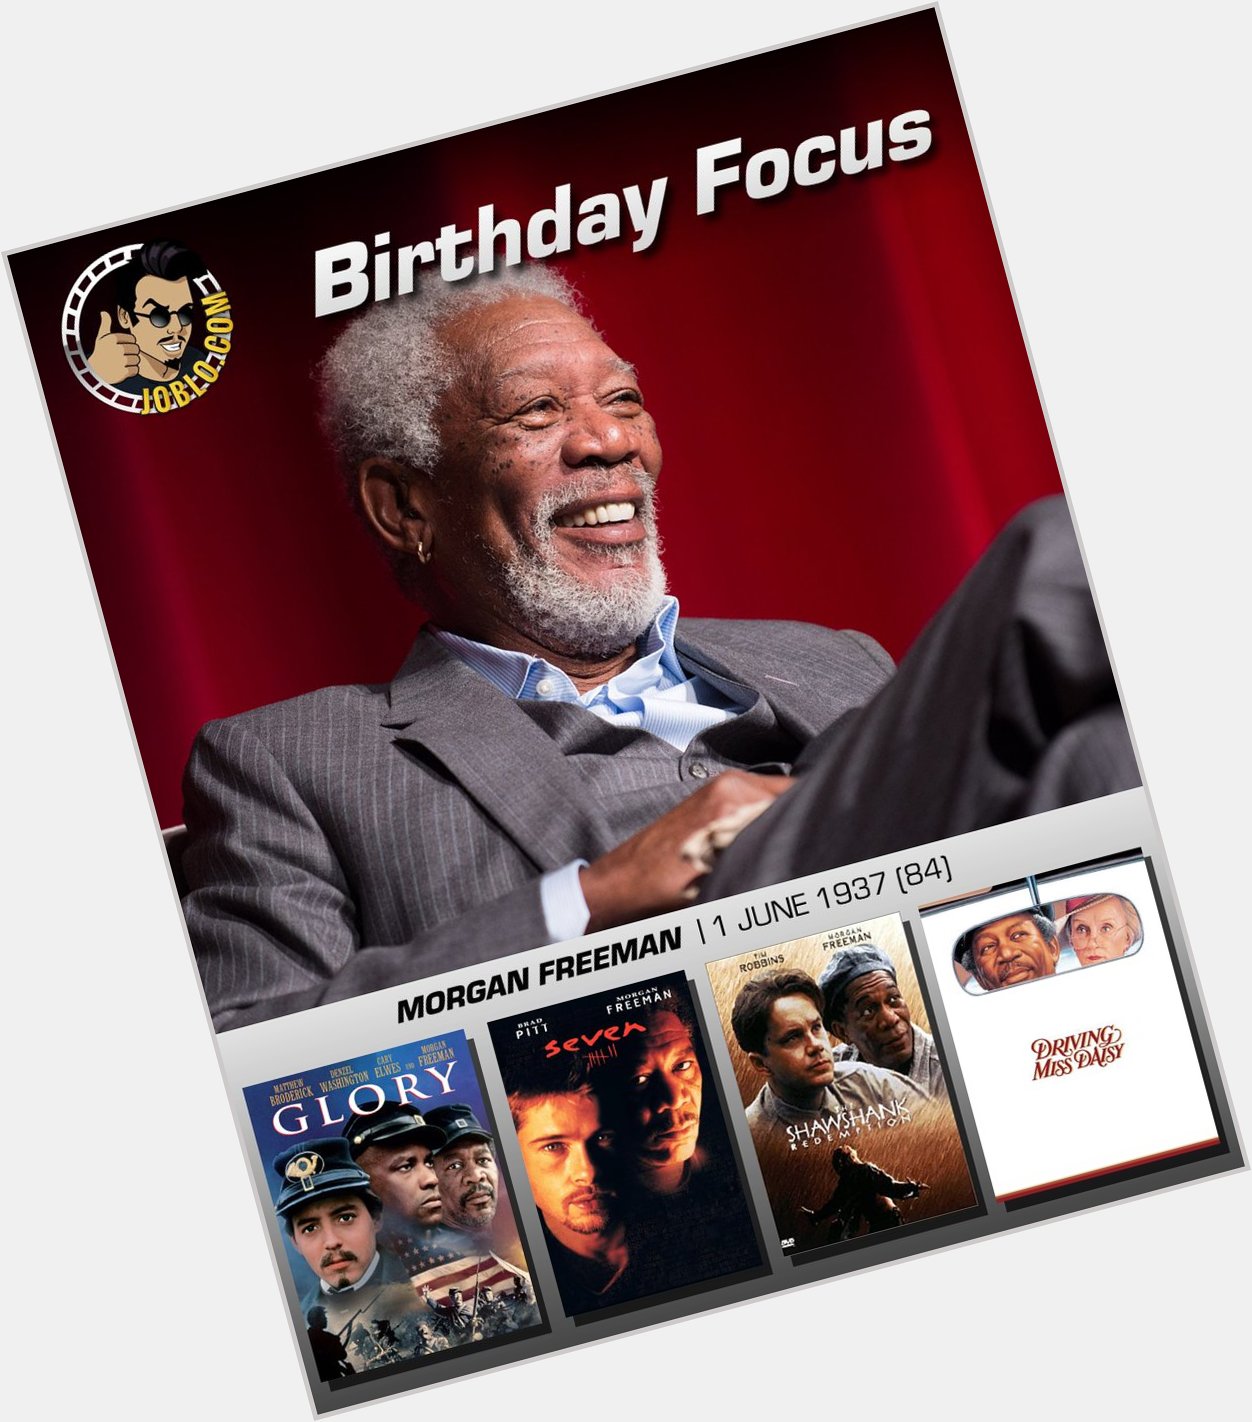 Wishing the great Morgan Freeman a very happy 84th birthday! 